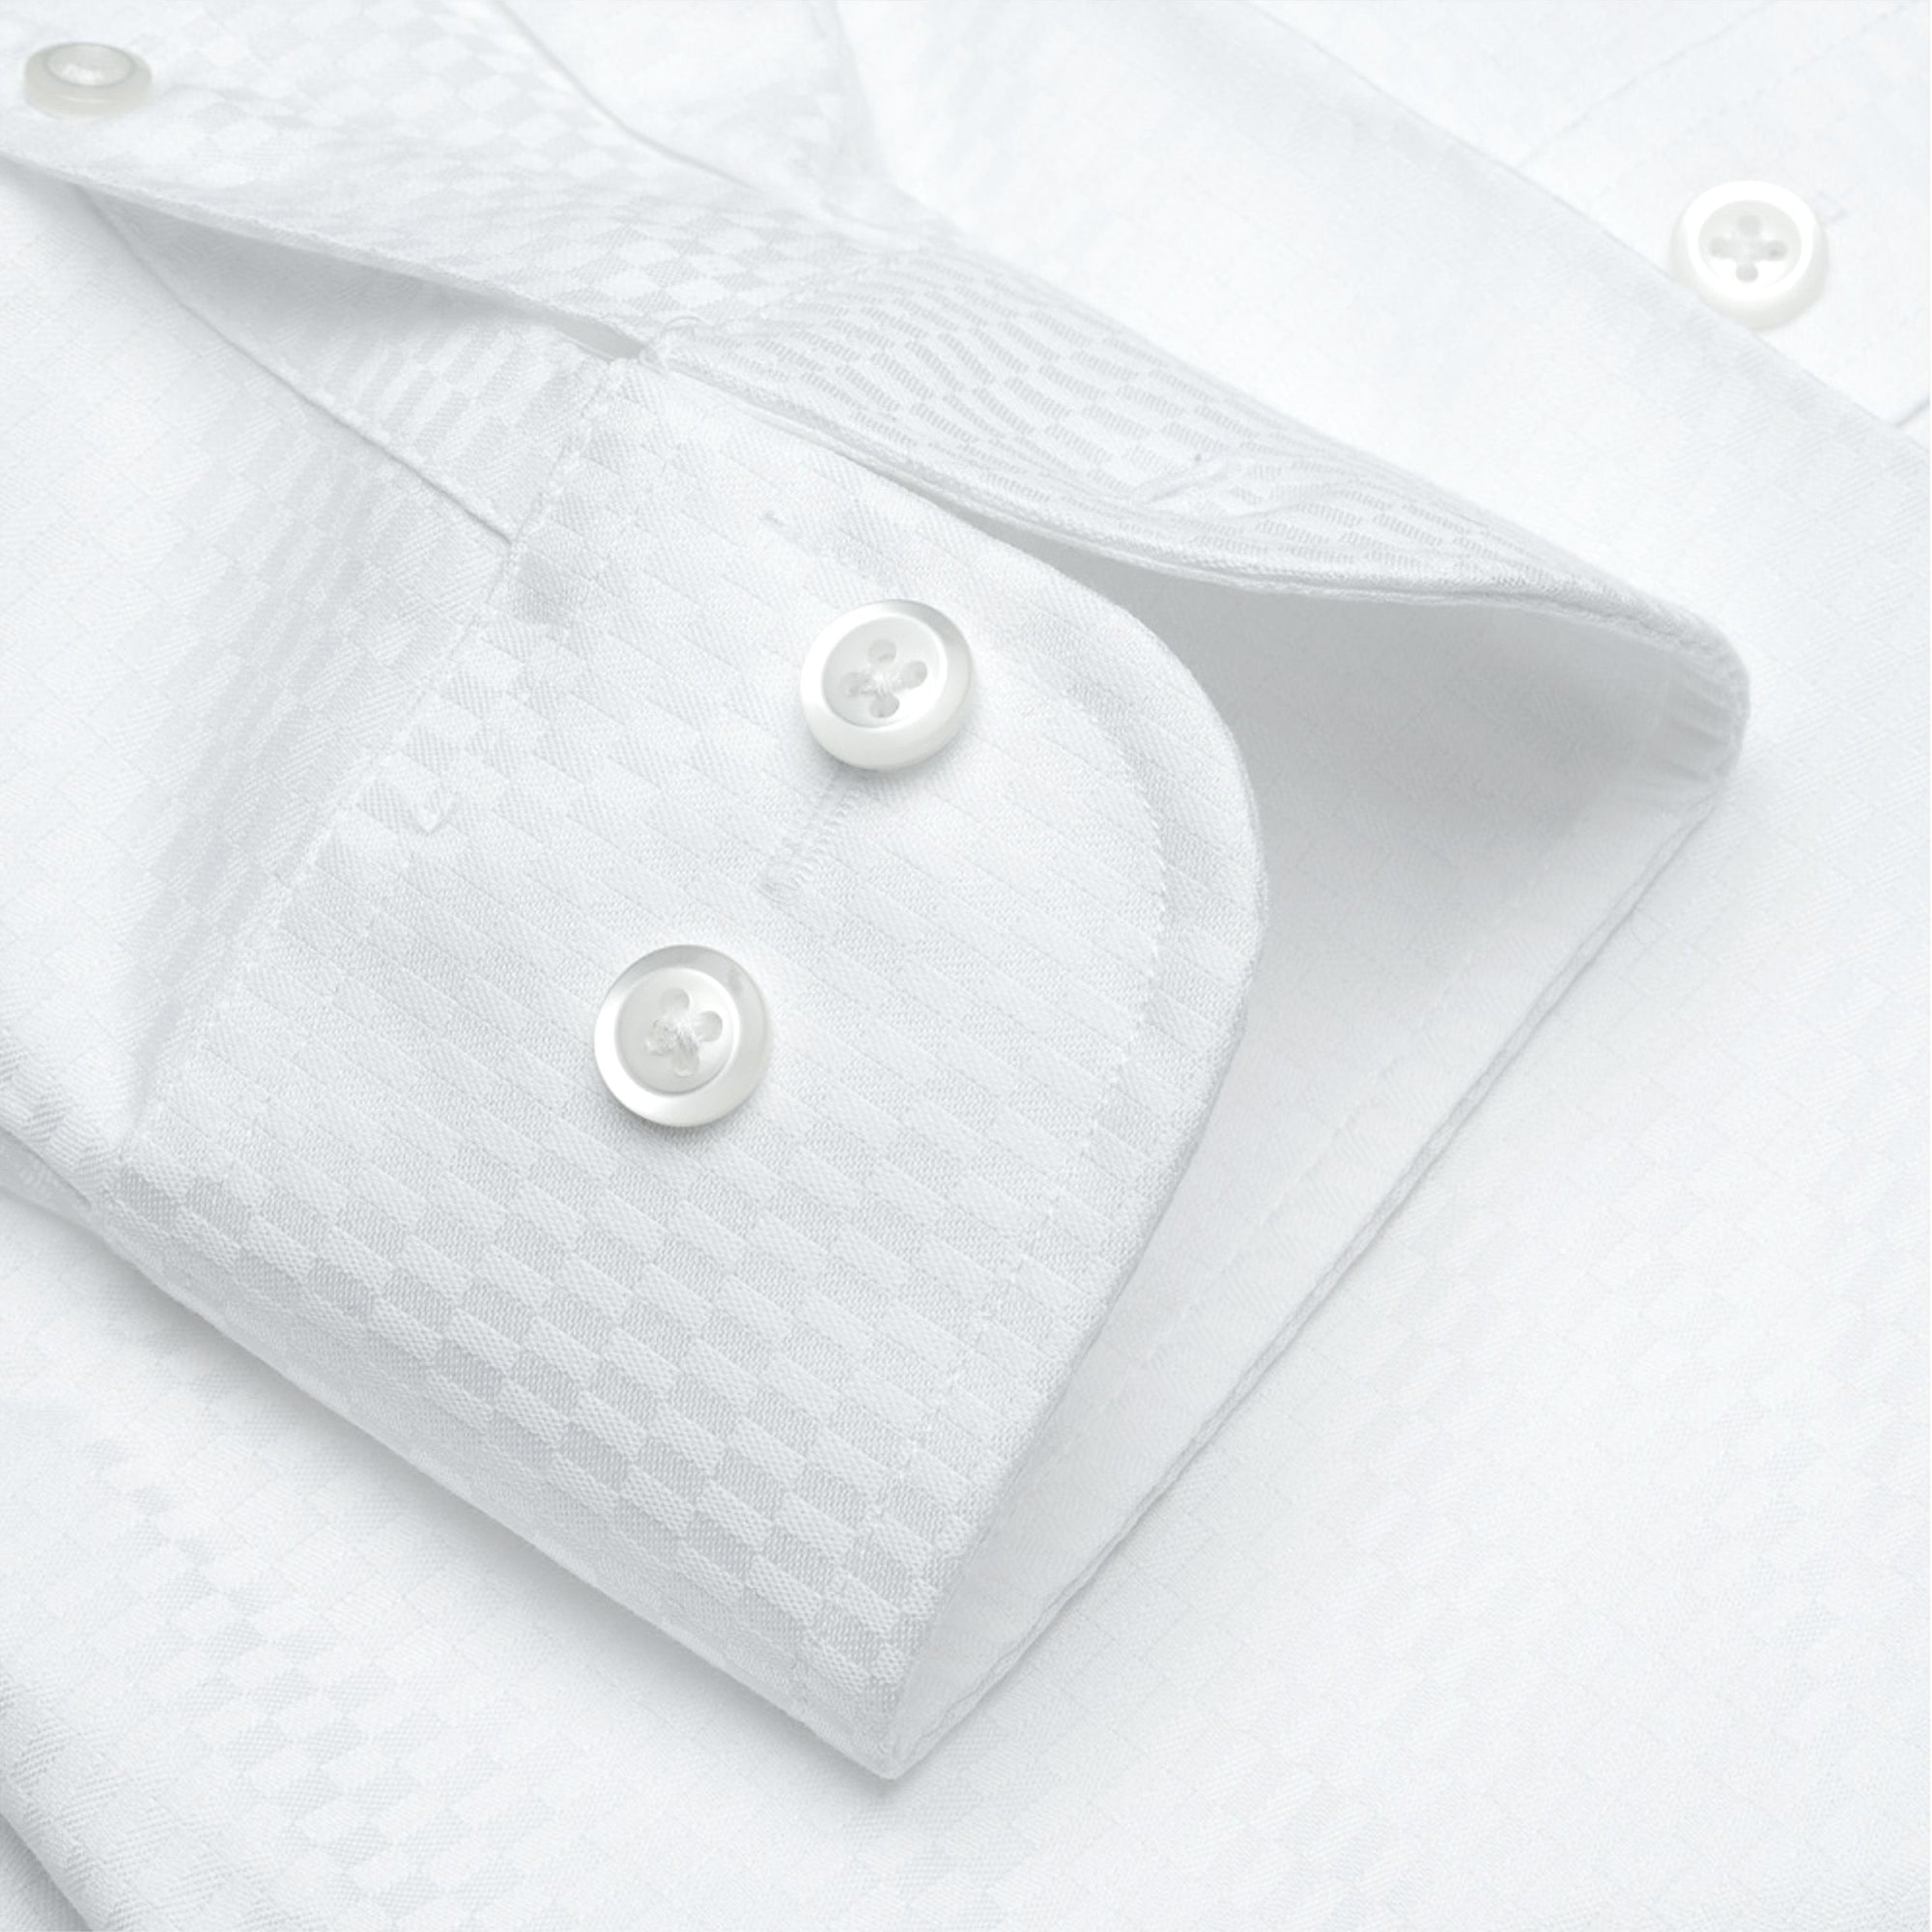 The Washington - Wrinkle-Free Tonal Check Cotton Dress Shirt in White by Cooper & Stewart